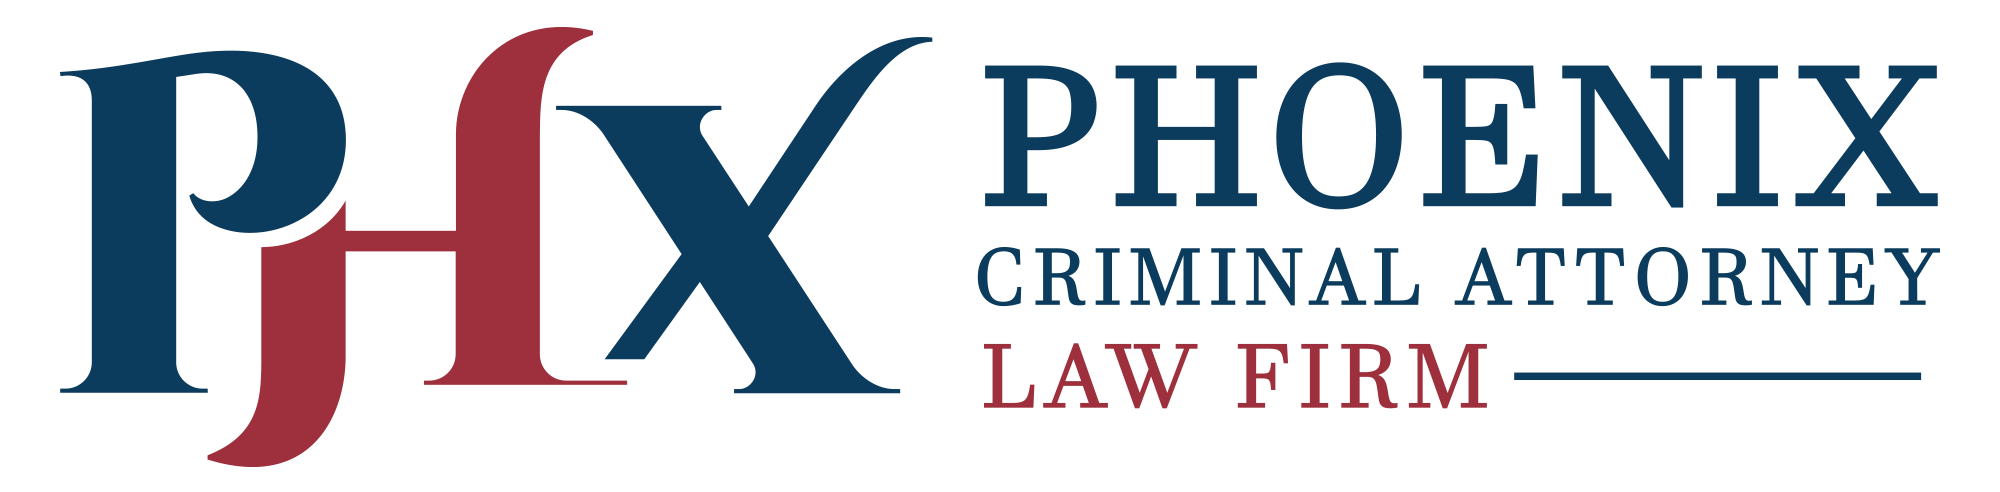 Phoenix Criminal Attorney logo